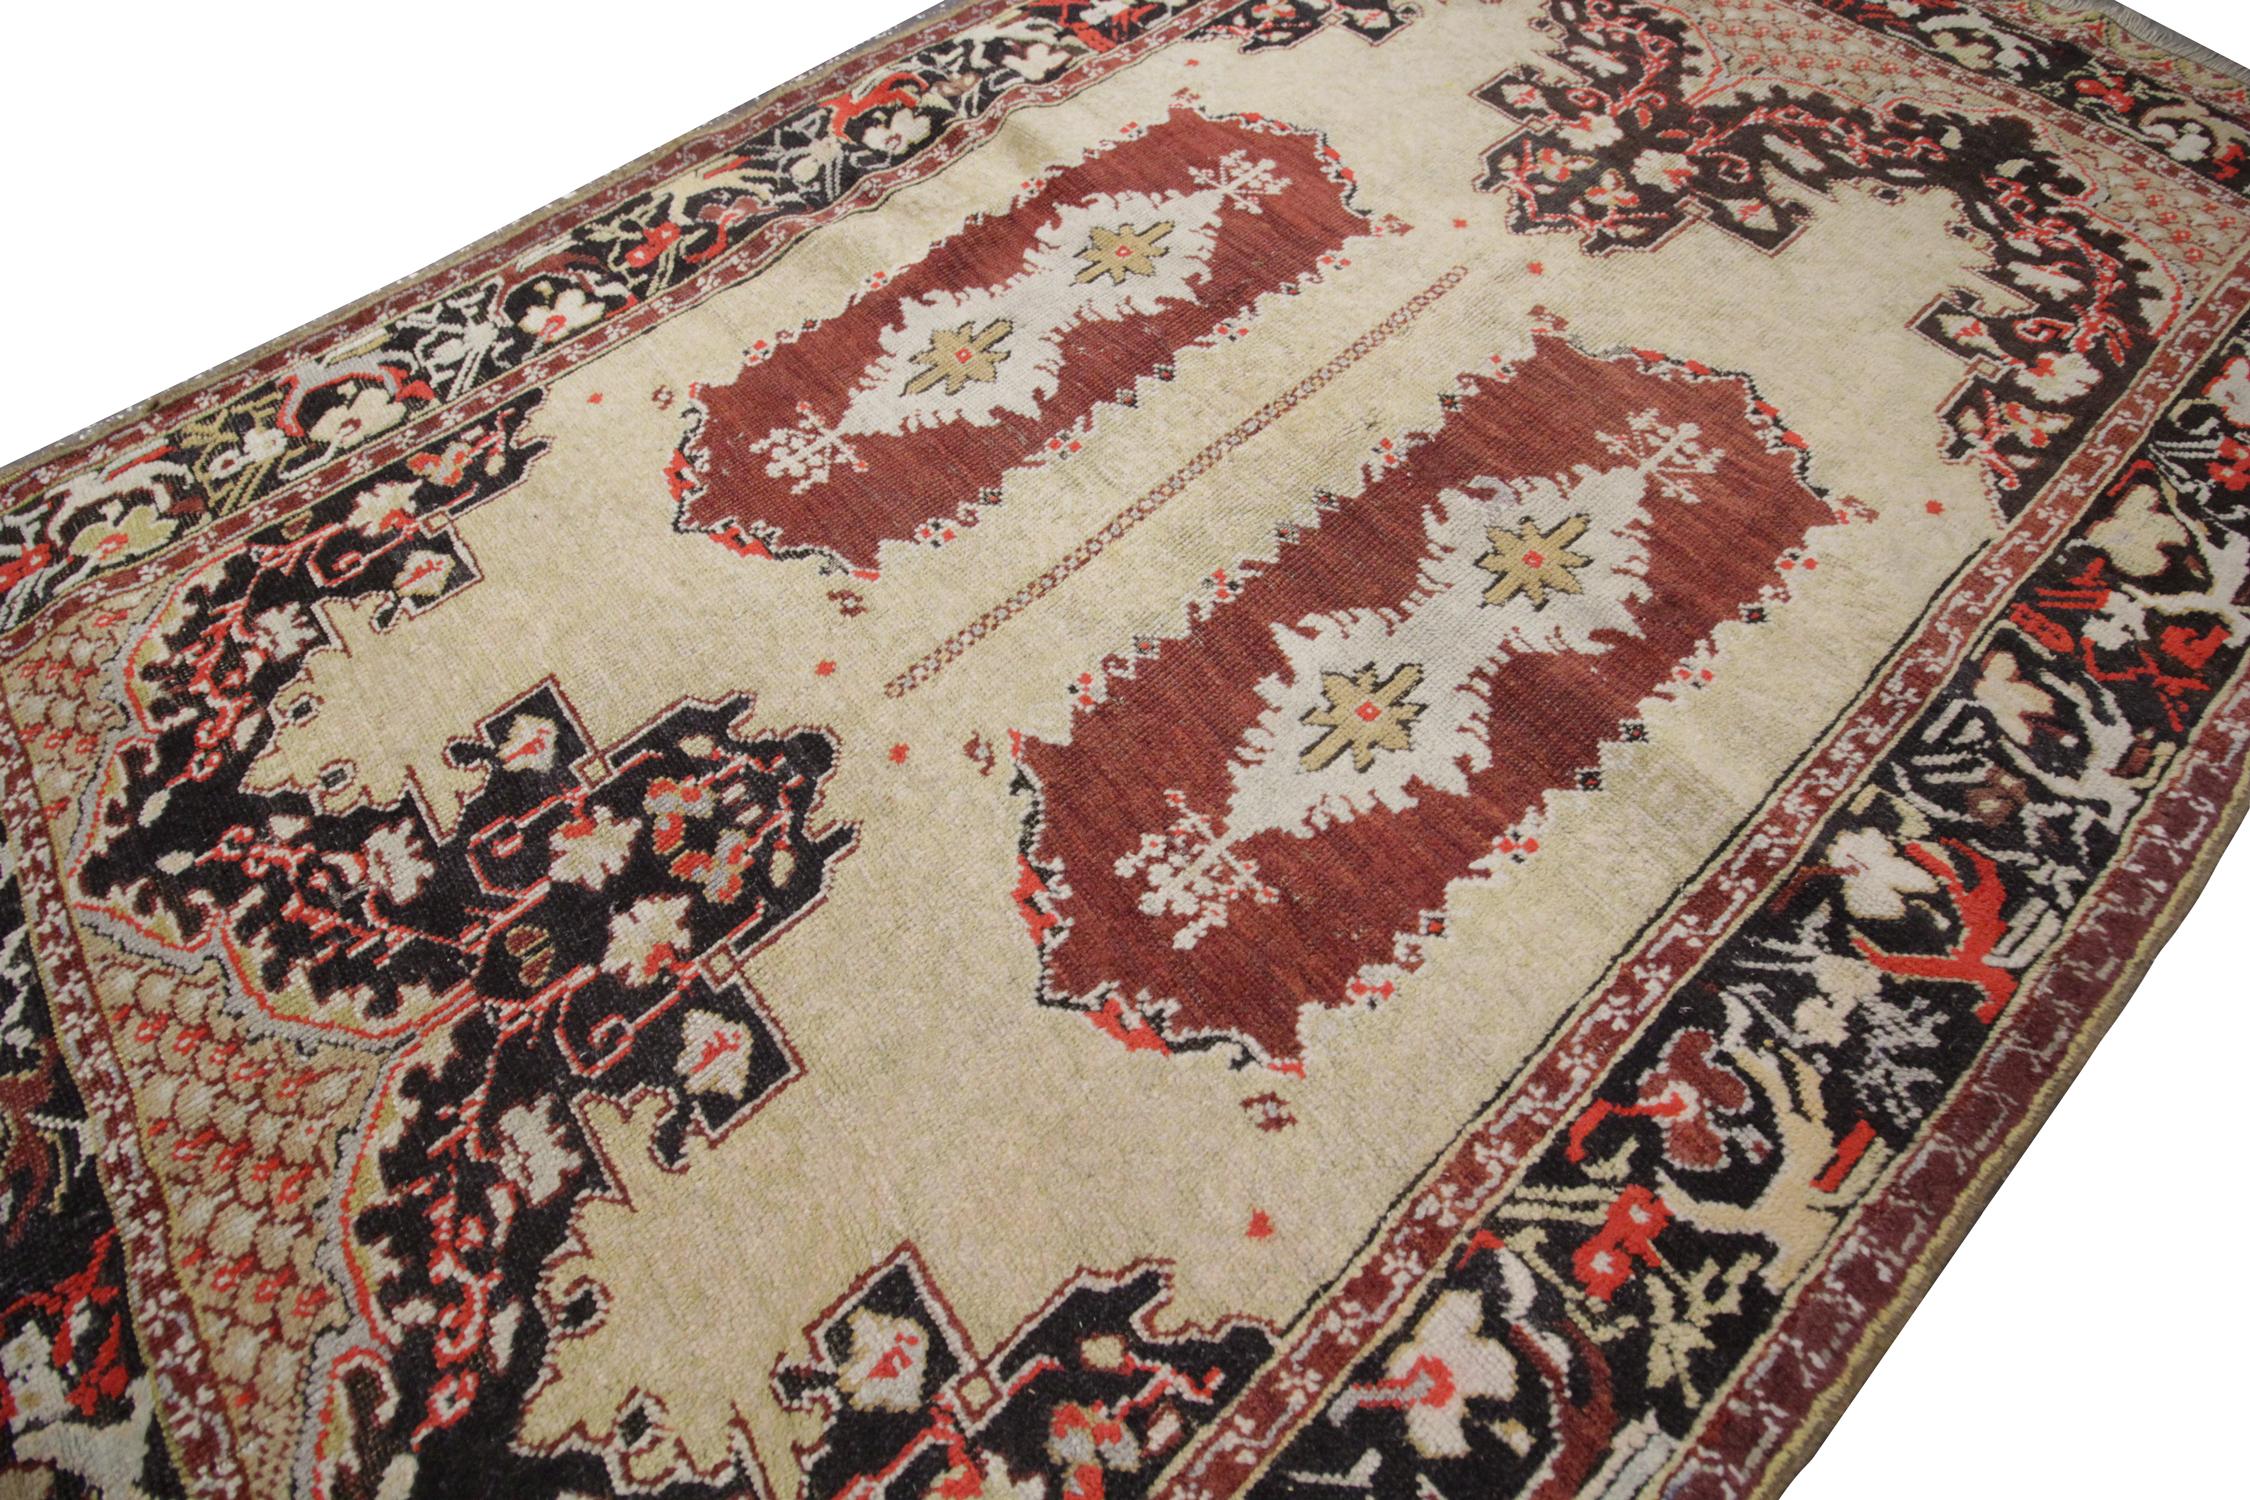 Tribal Handmade Rug Antique Carpet Turkish Living Room Rug, Traditional Oriental Rugs For Sale